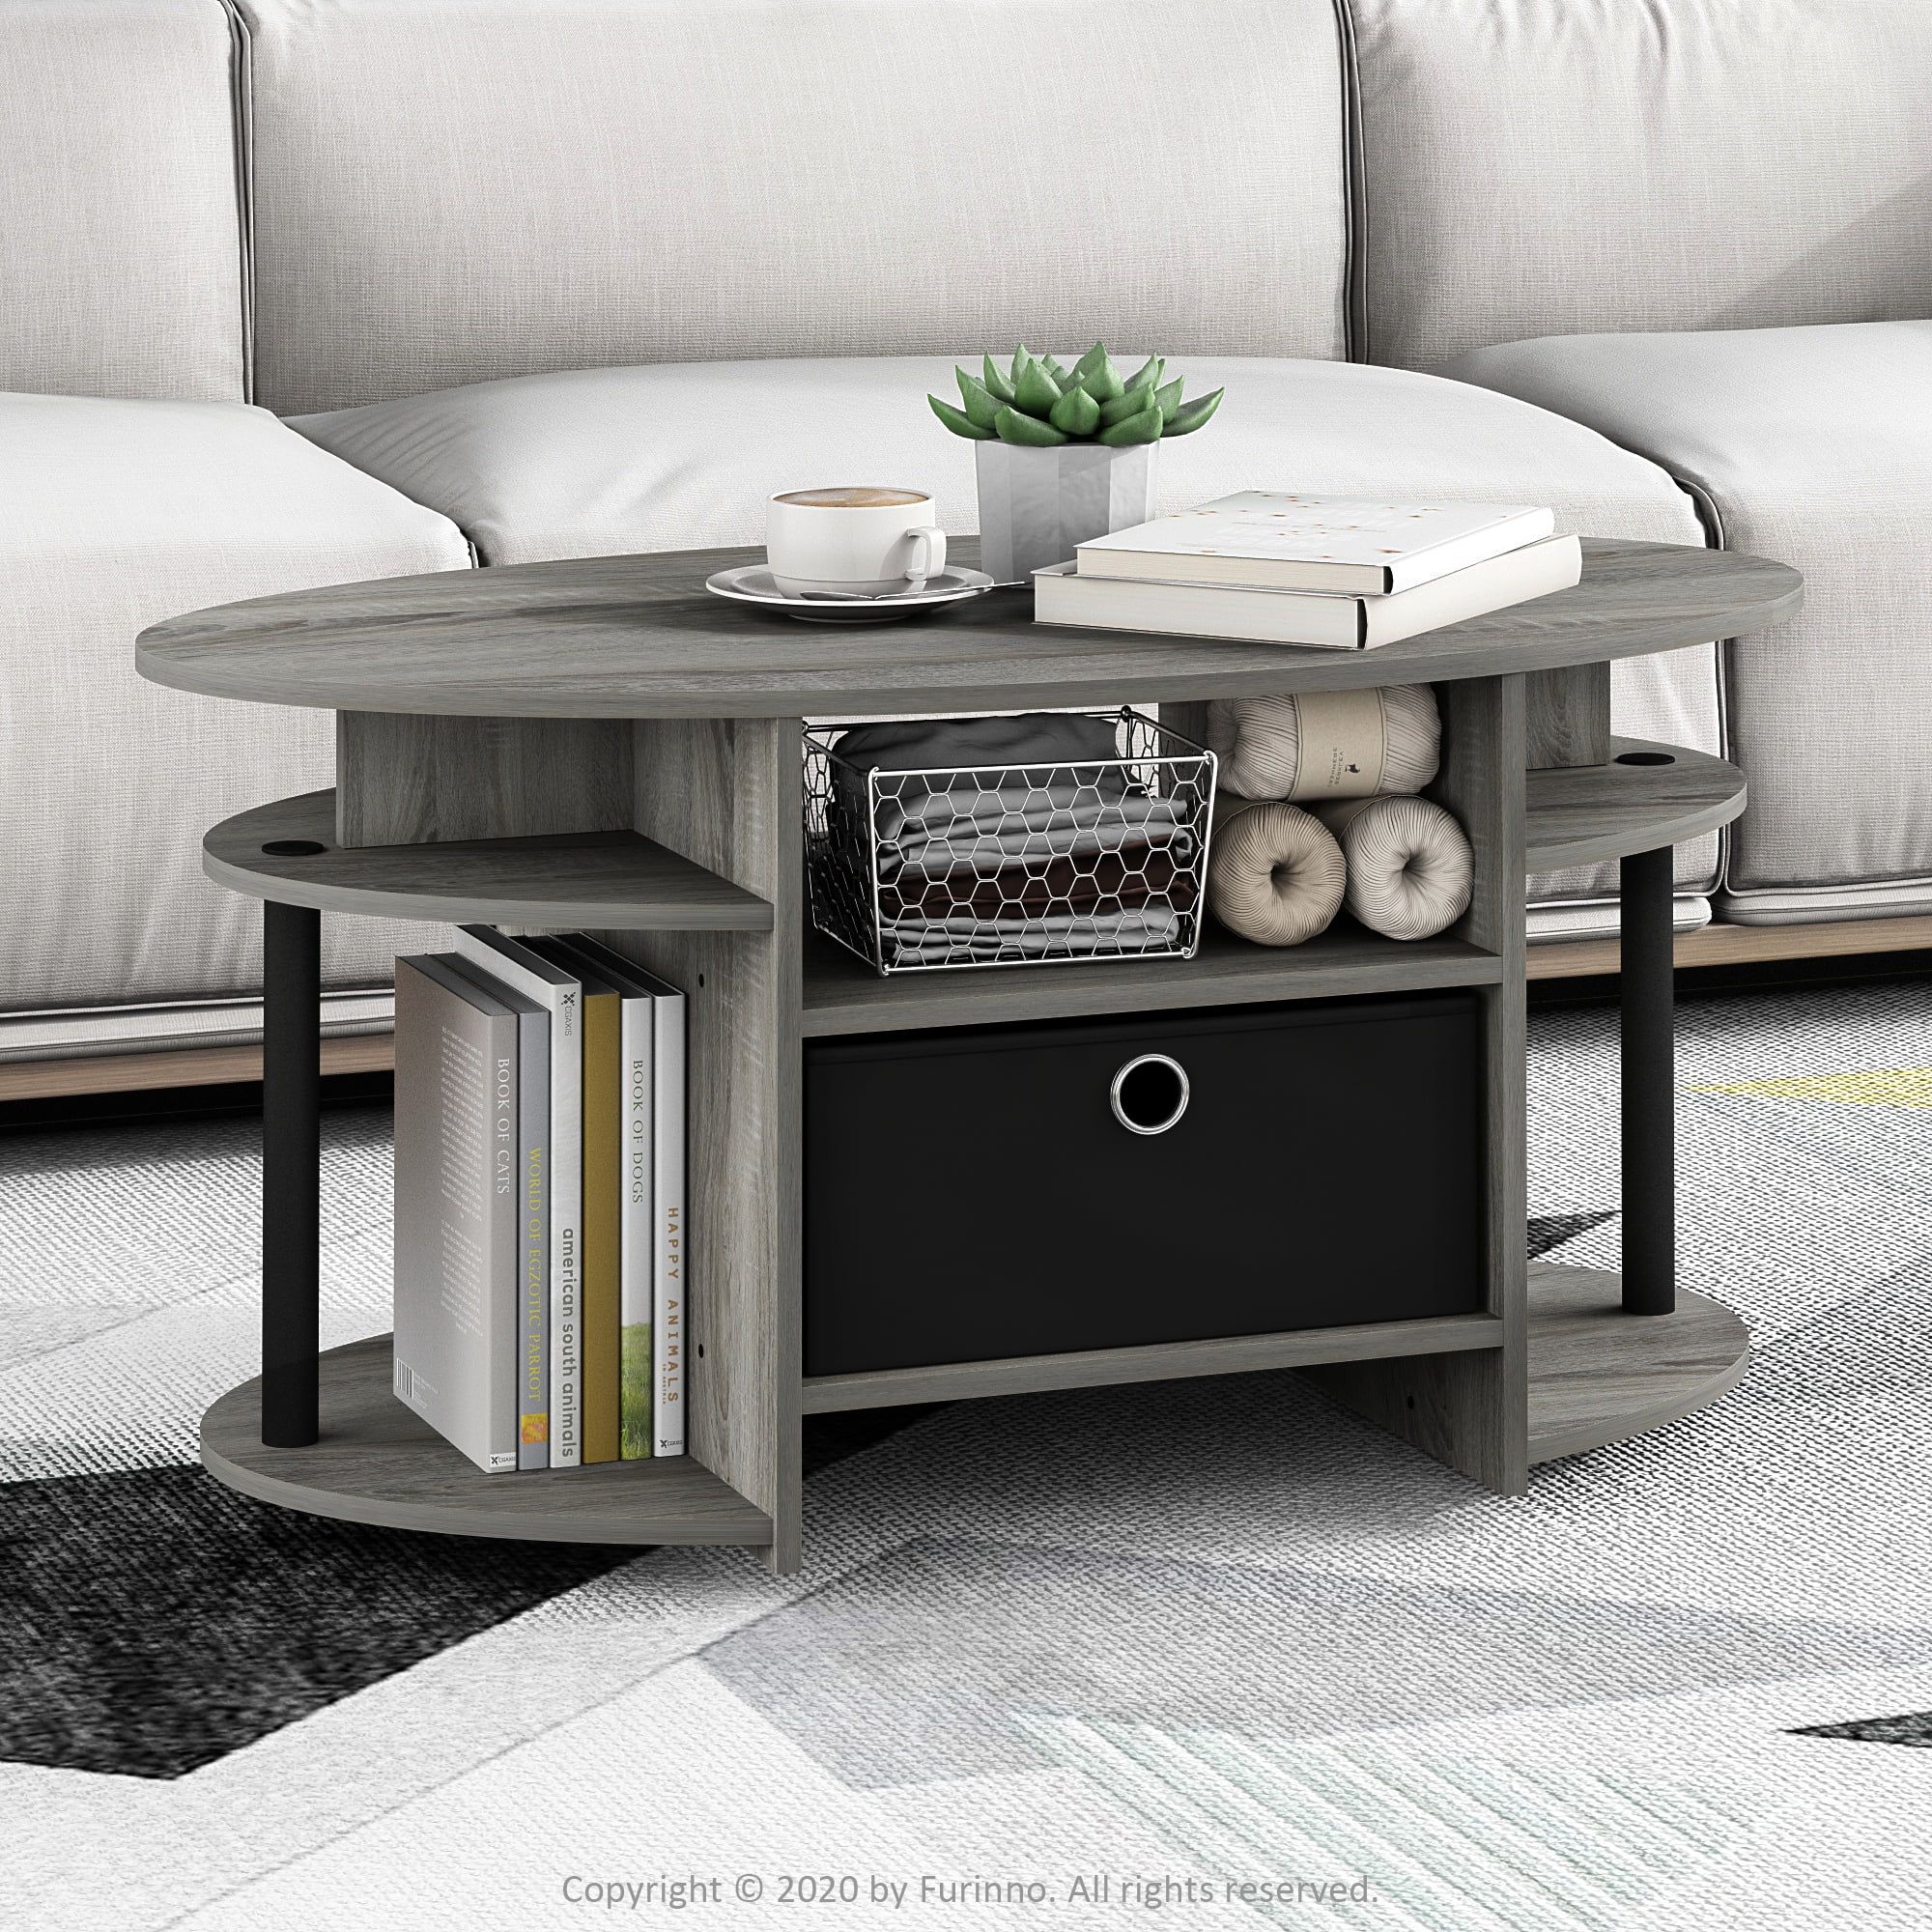 Furinno Jaya Simple Design Oval Coffee Table With Bin, French Oak Grey Regarding Simple Design Coffee Tables (Photo 8 of 15)